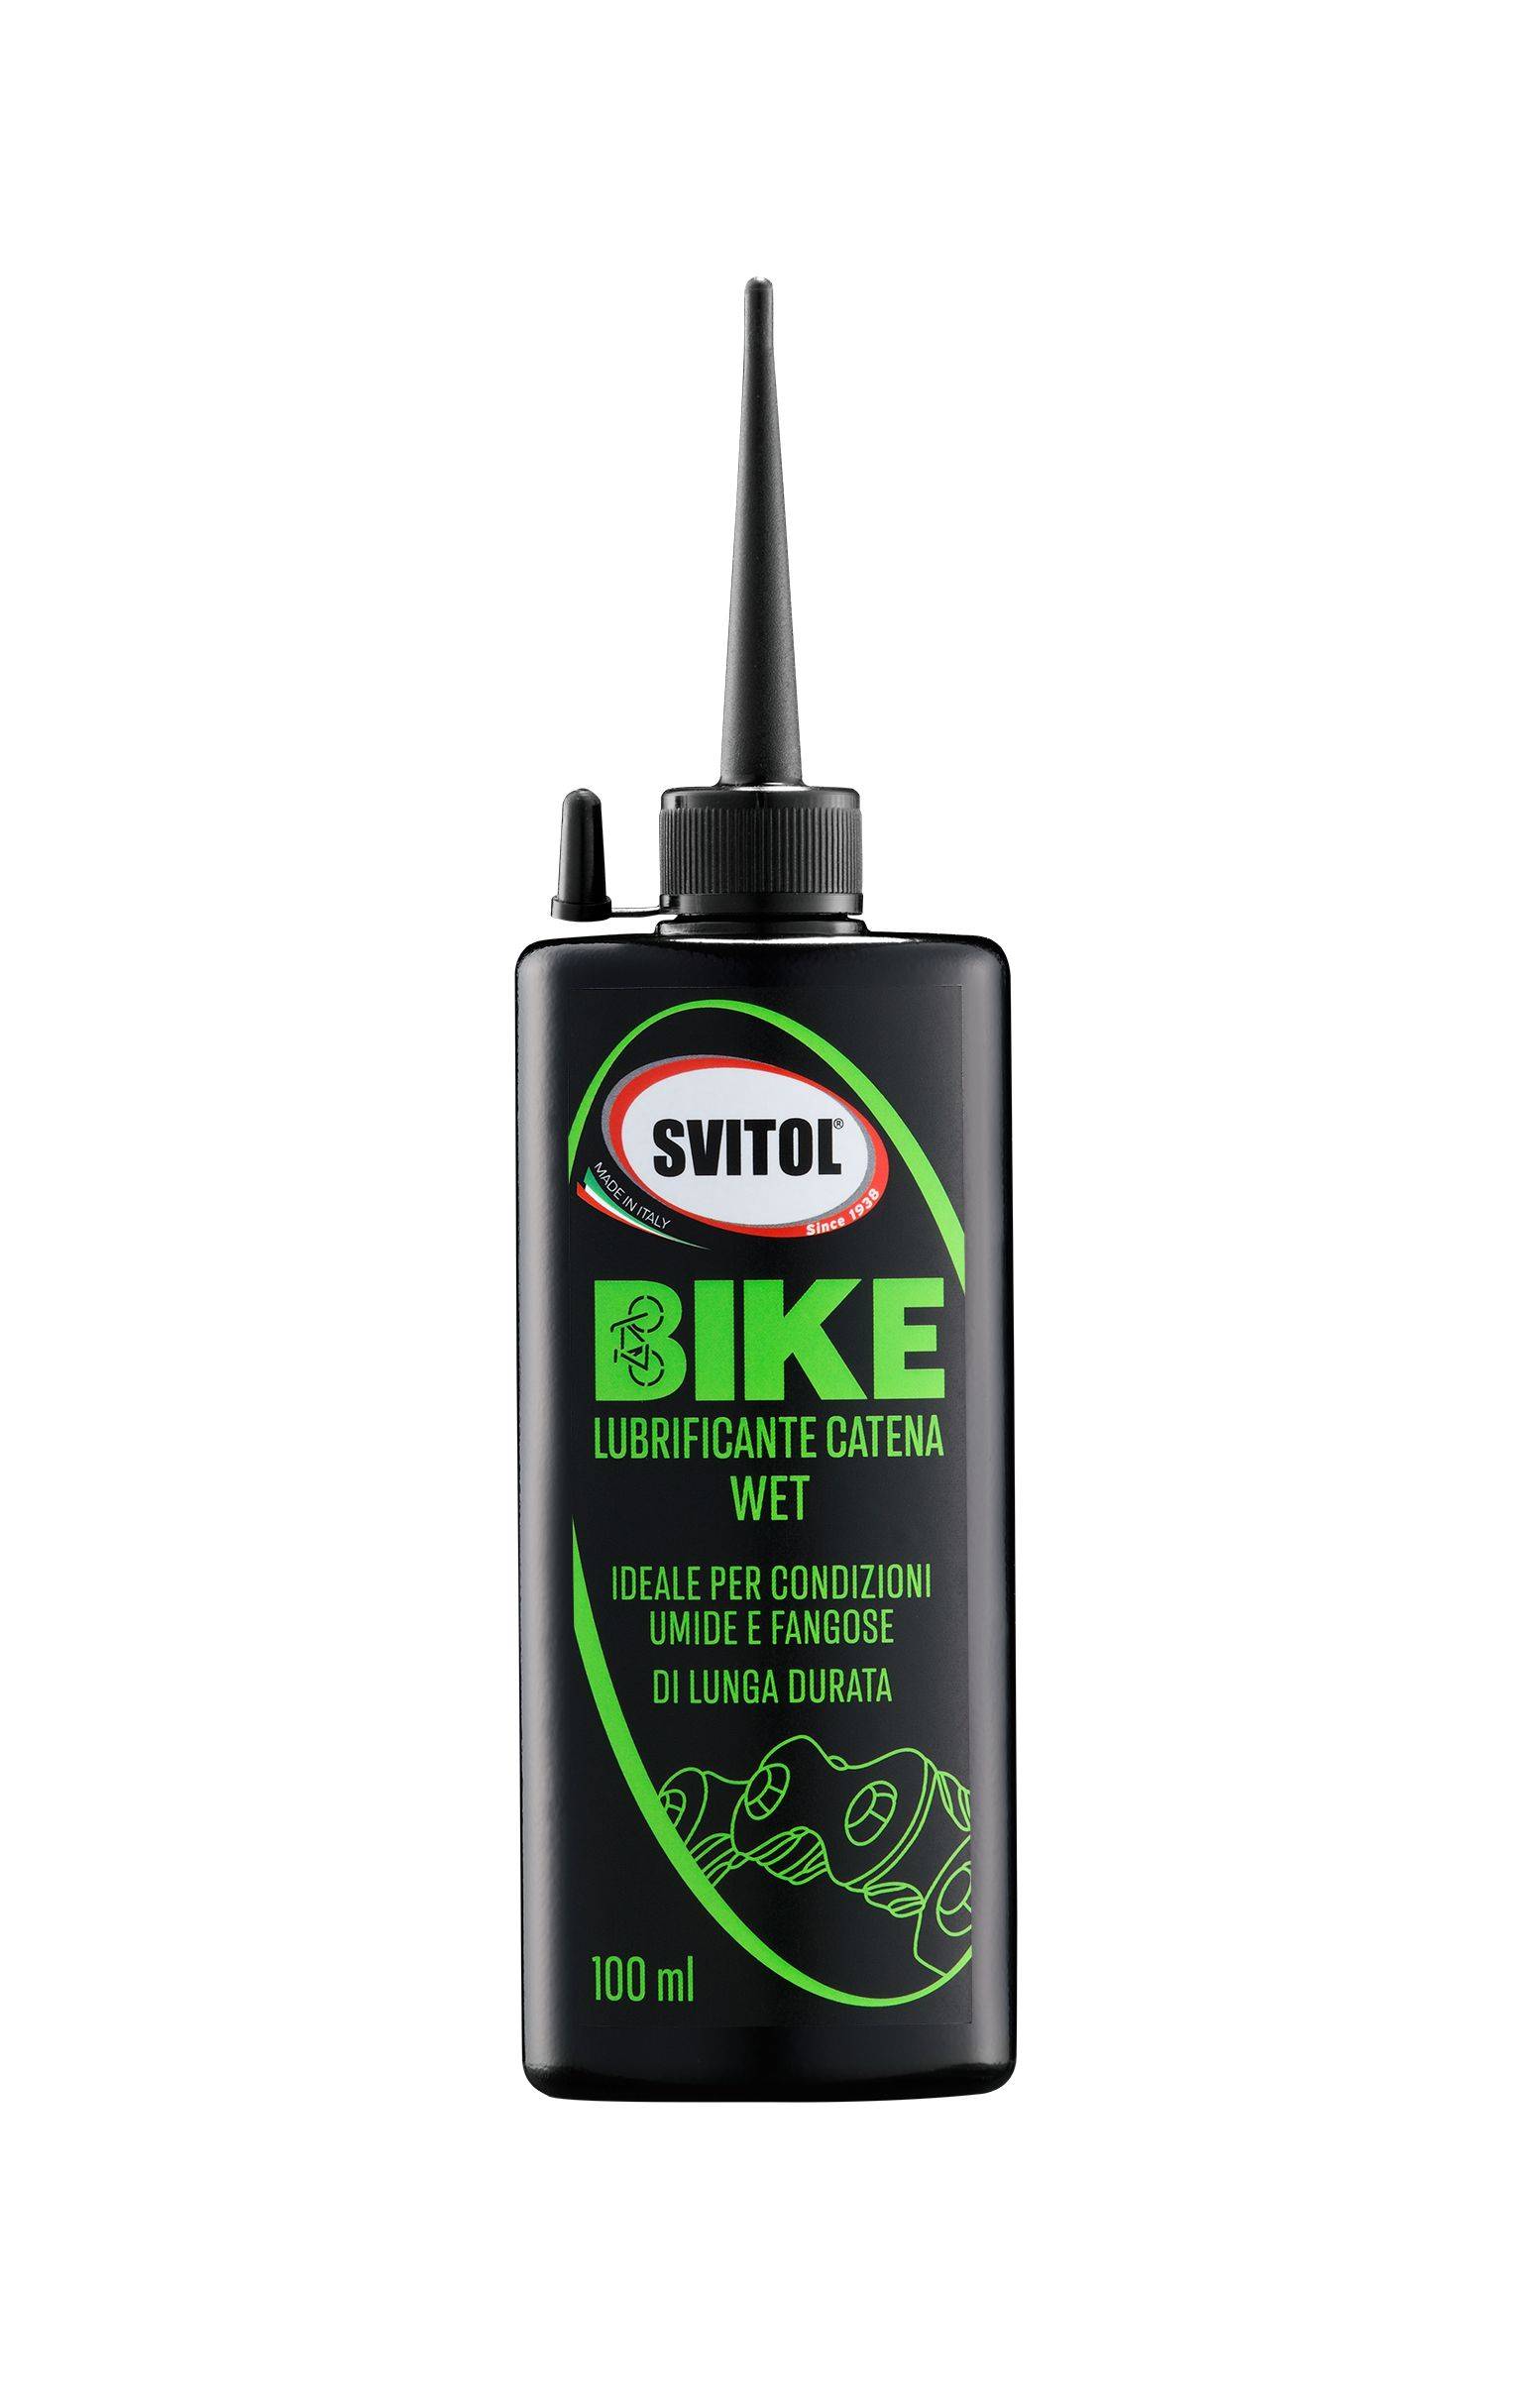 Svitol Bike – Lubrificante catena wet per condizioni asciutte 100 ml